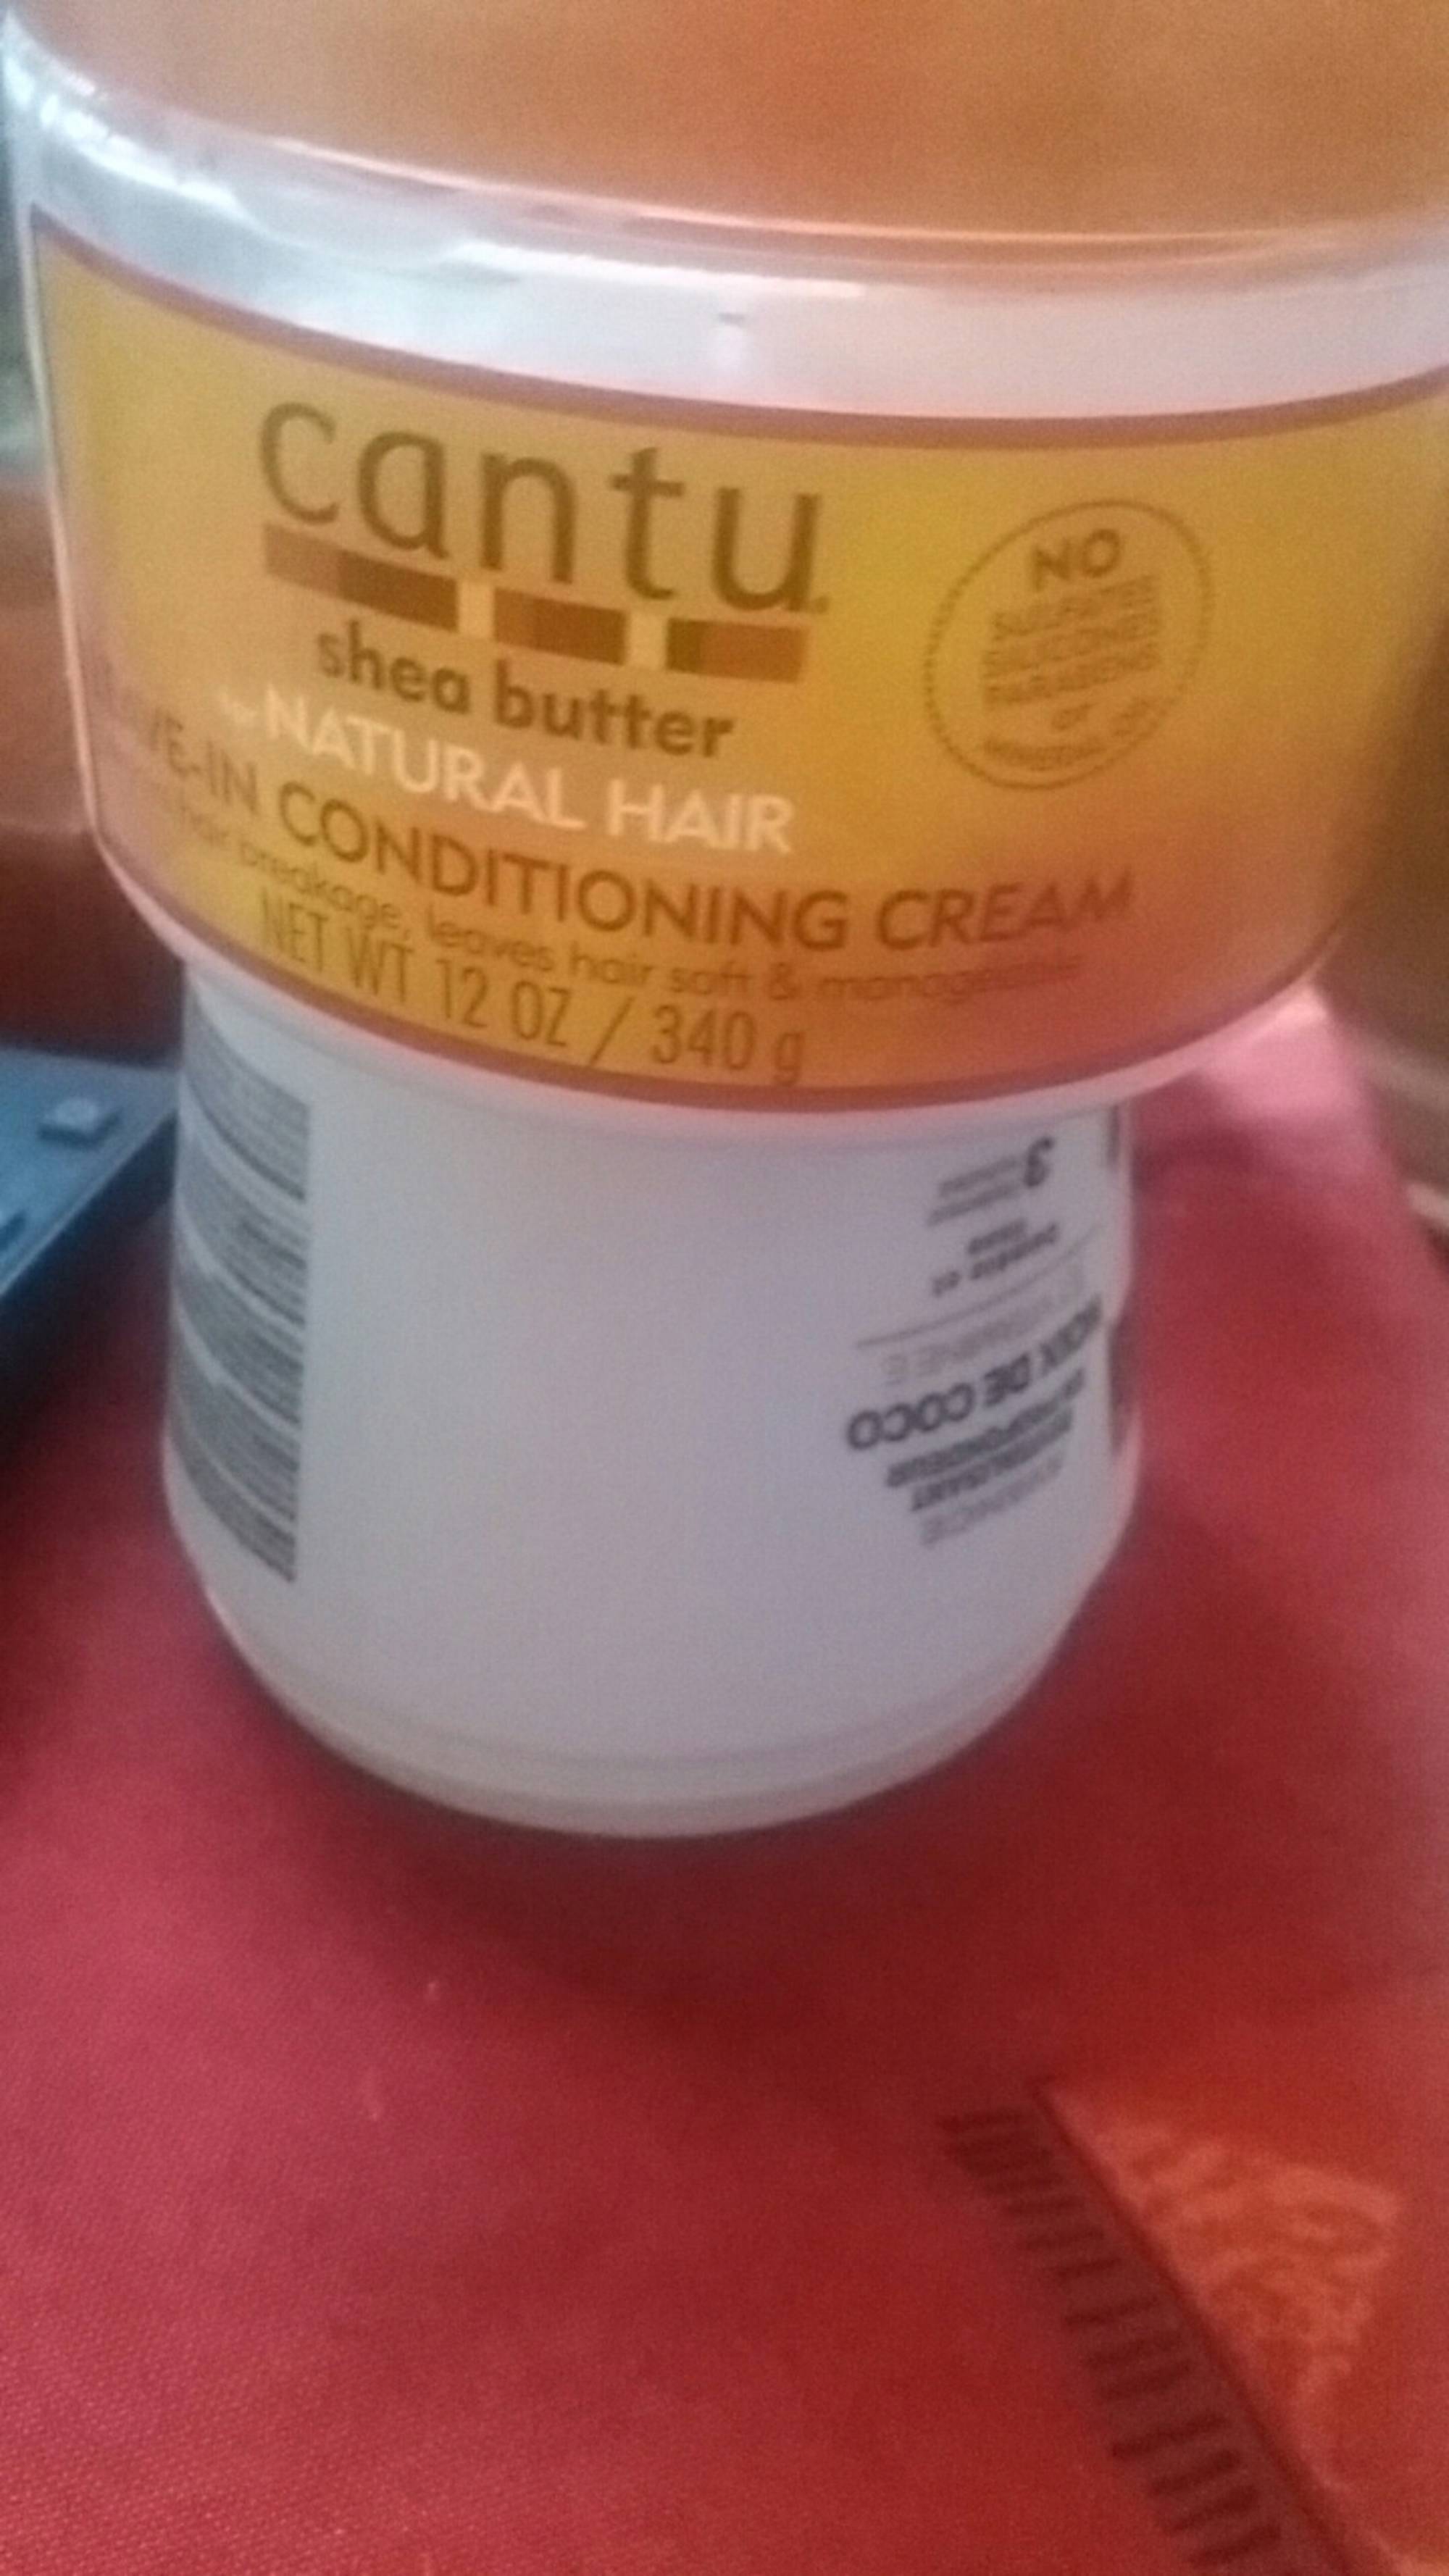 CANTU - Shea butter - Leave-in Conditioning Cream